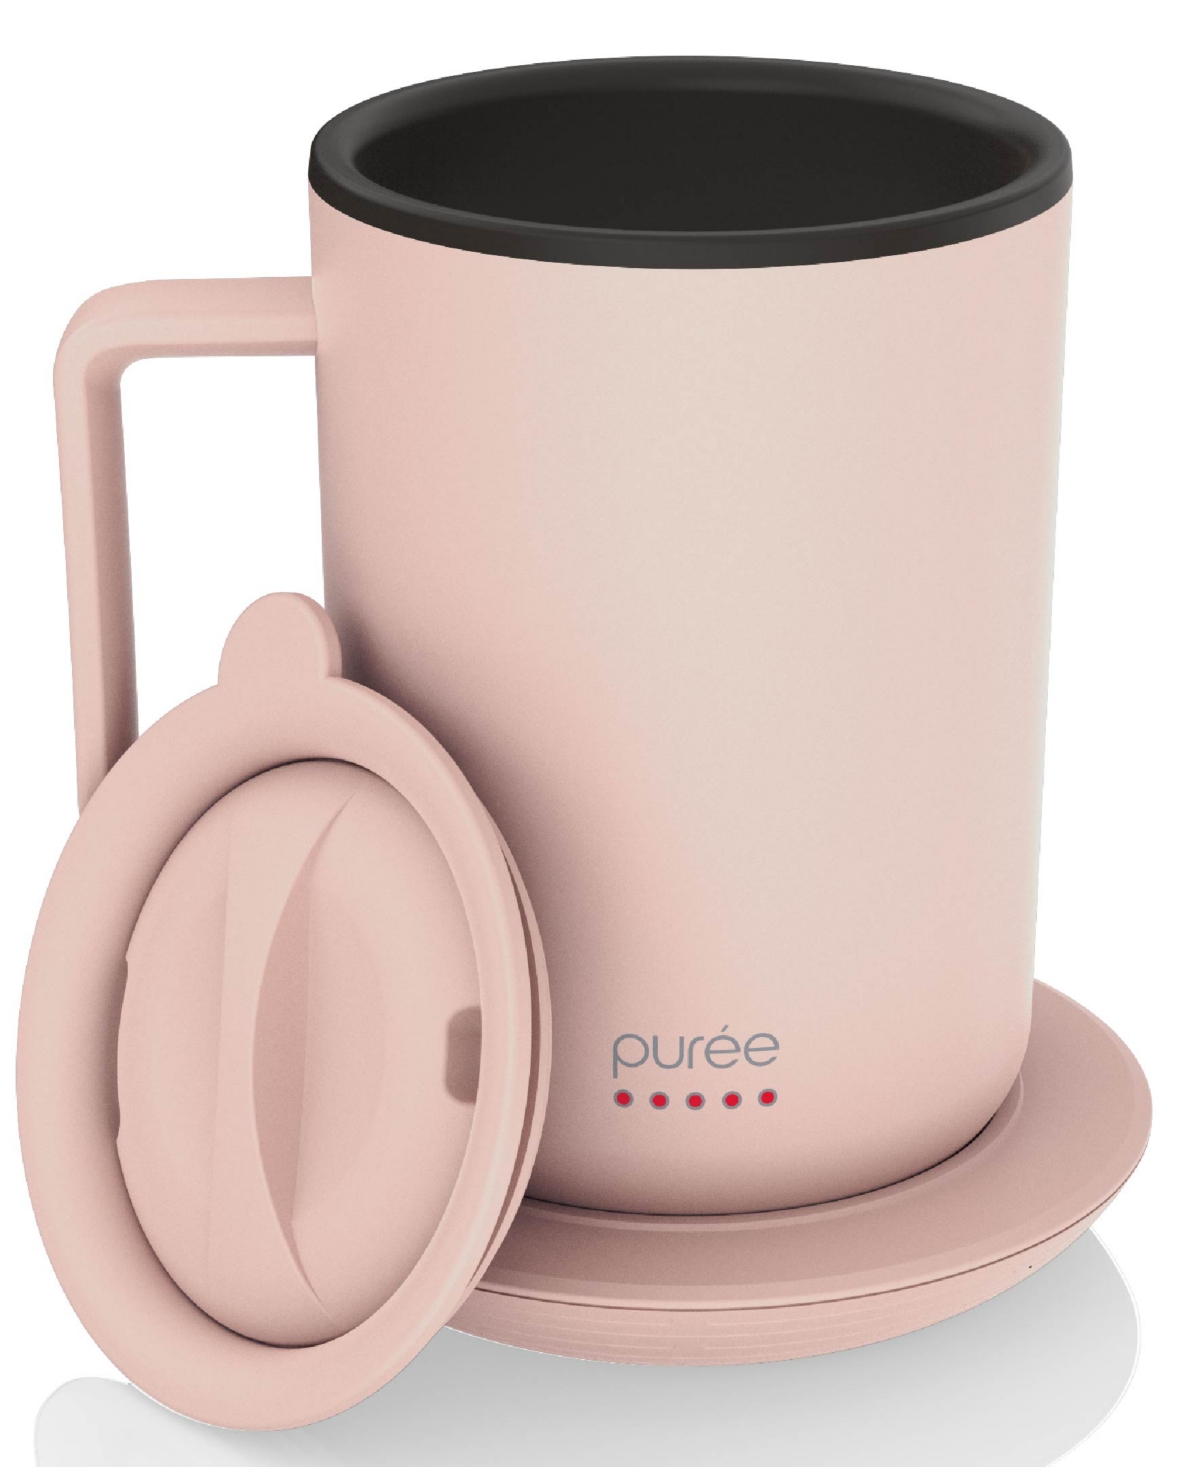 Tzumi Puree Warming Coffee Mug, 12 Oz. Stainless Steel Coffee Mug With Mug Warmer Coaster And Lid In Pink